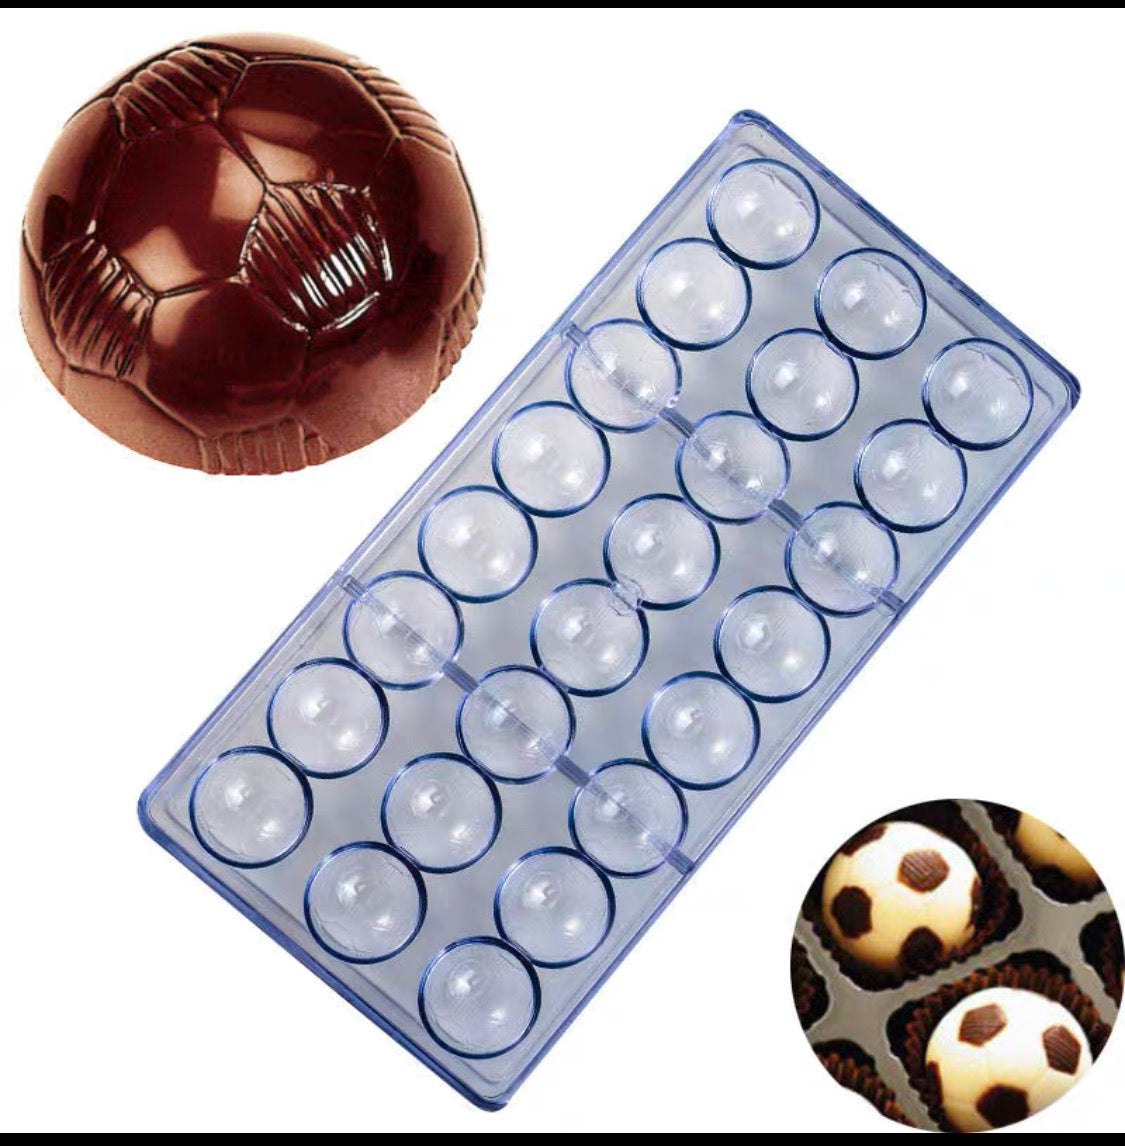 Shunda Football Shaped Polycarbonate Chocolate Mould